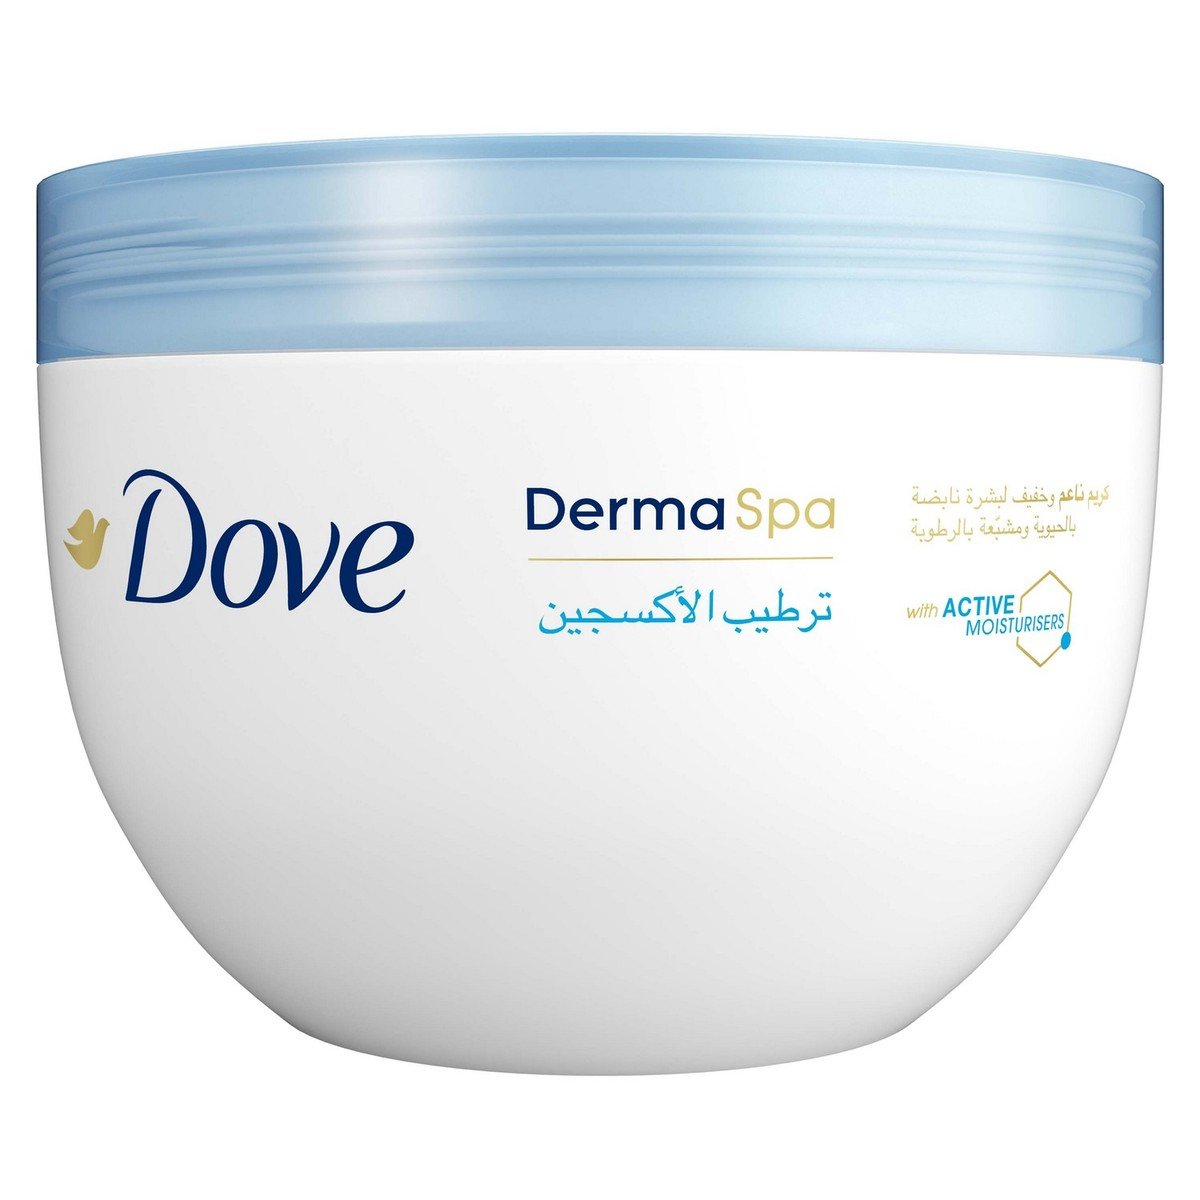 Dove DermaSpa Body Cream Oxygen Moisture 300 ml